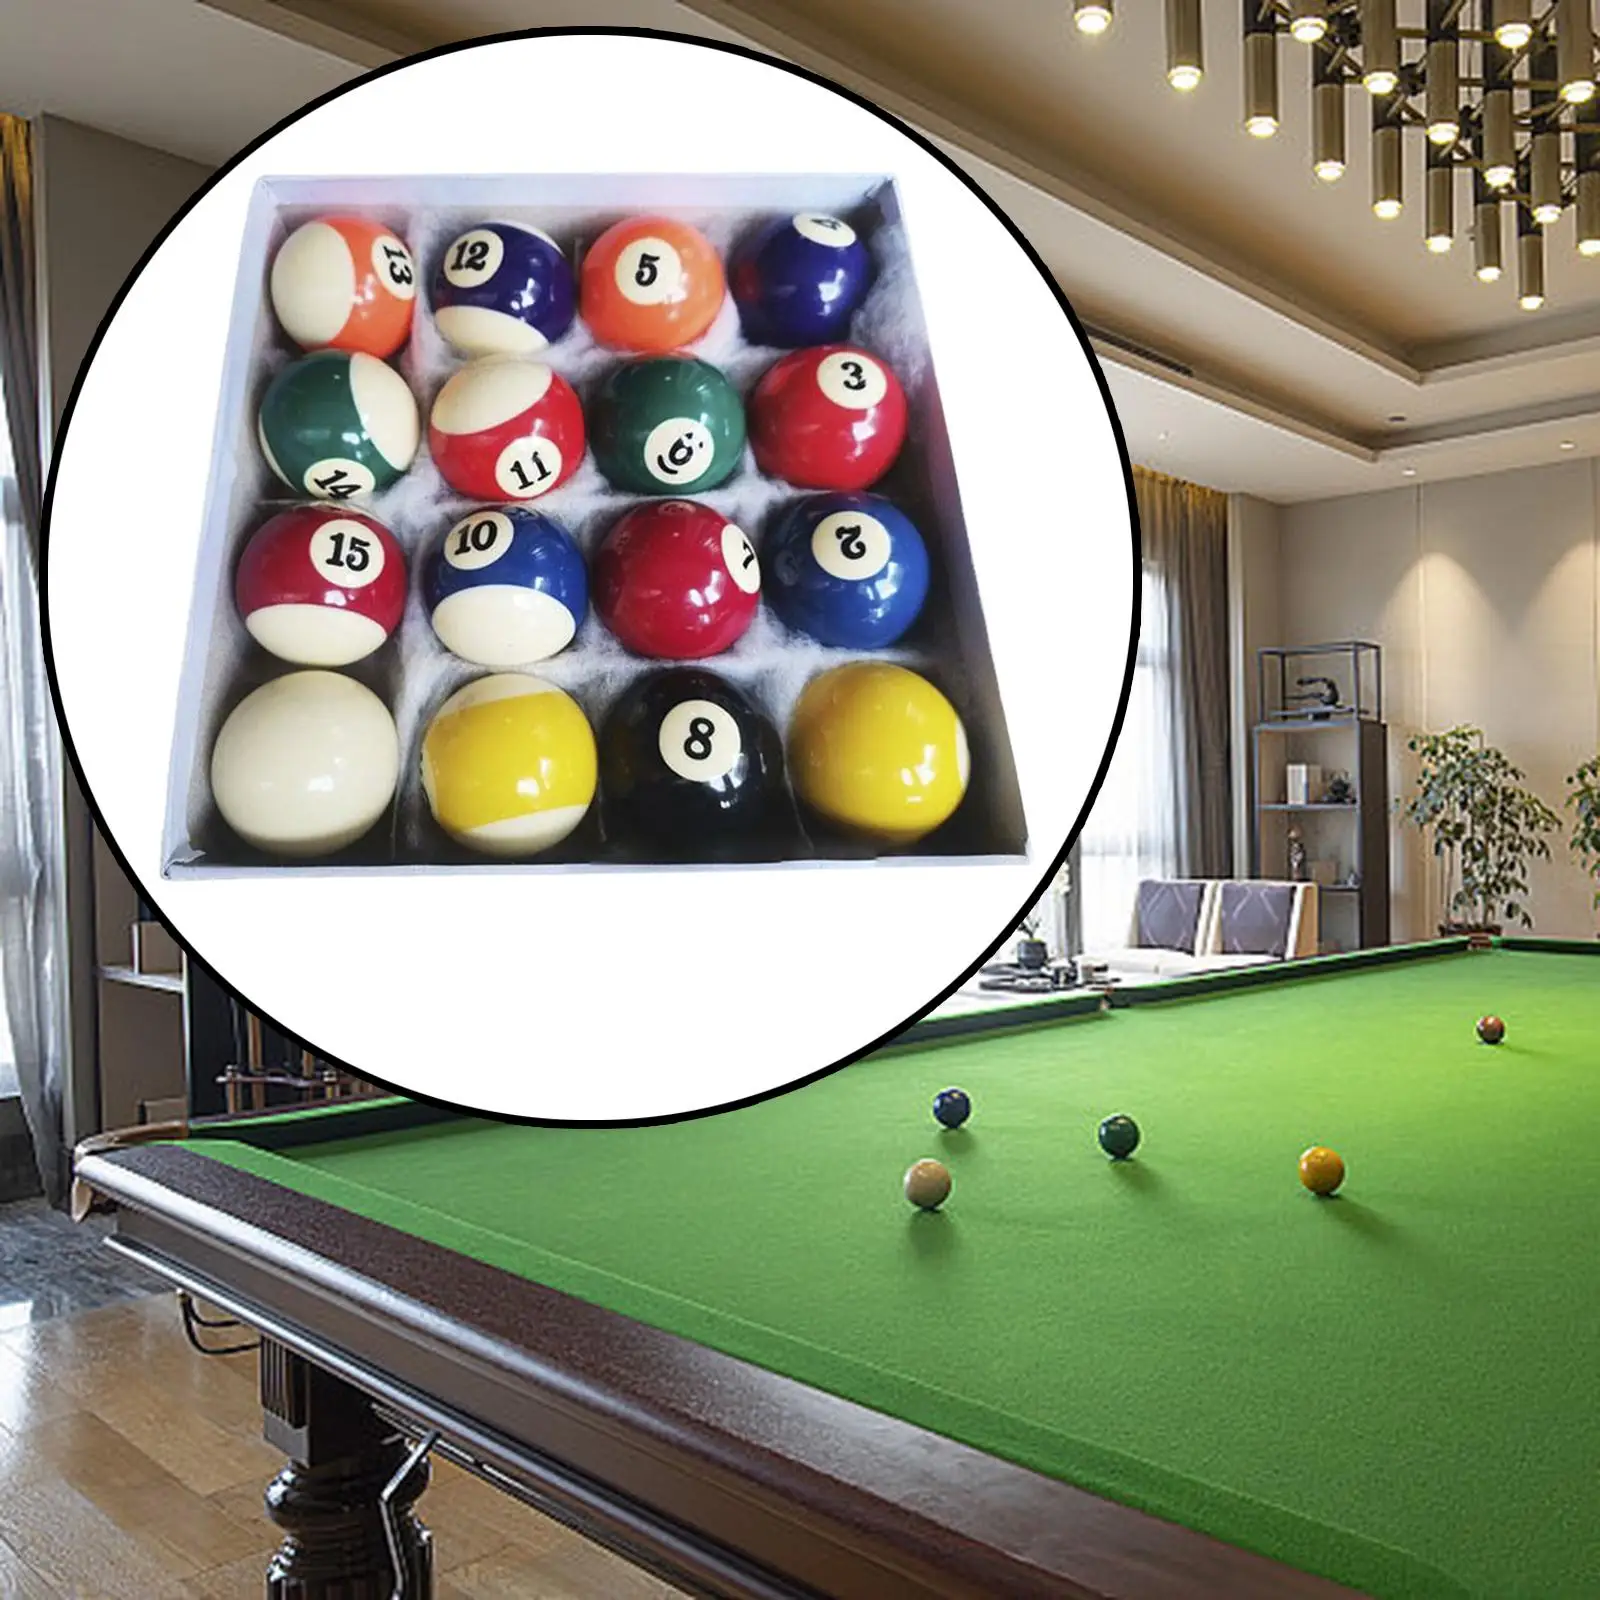 16x Billiard Balls Pool Balls Complete 16 Balls for Indoor Leisure Sports